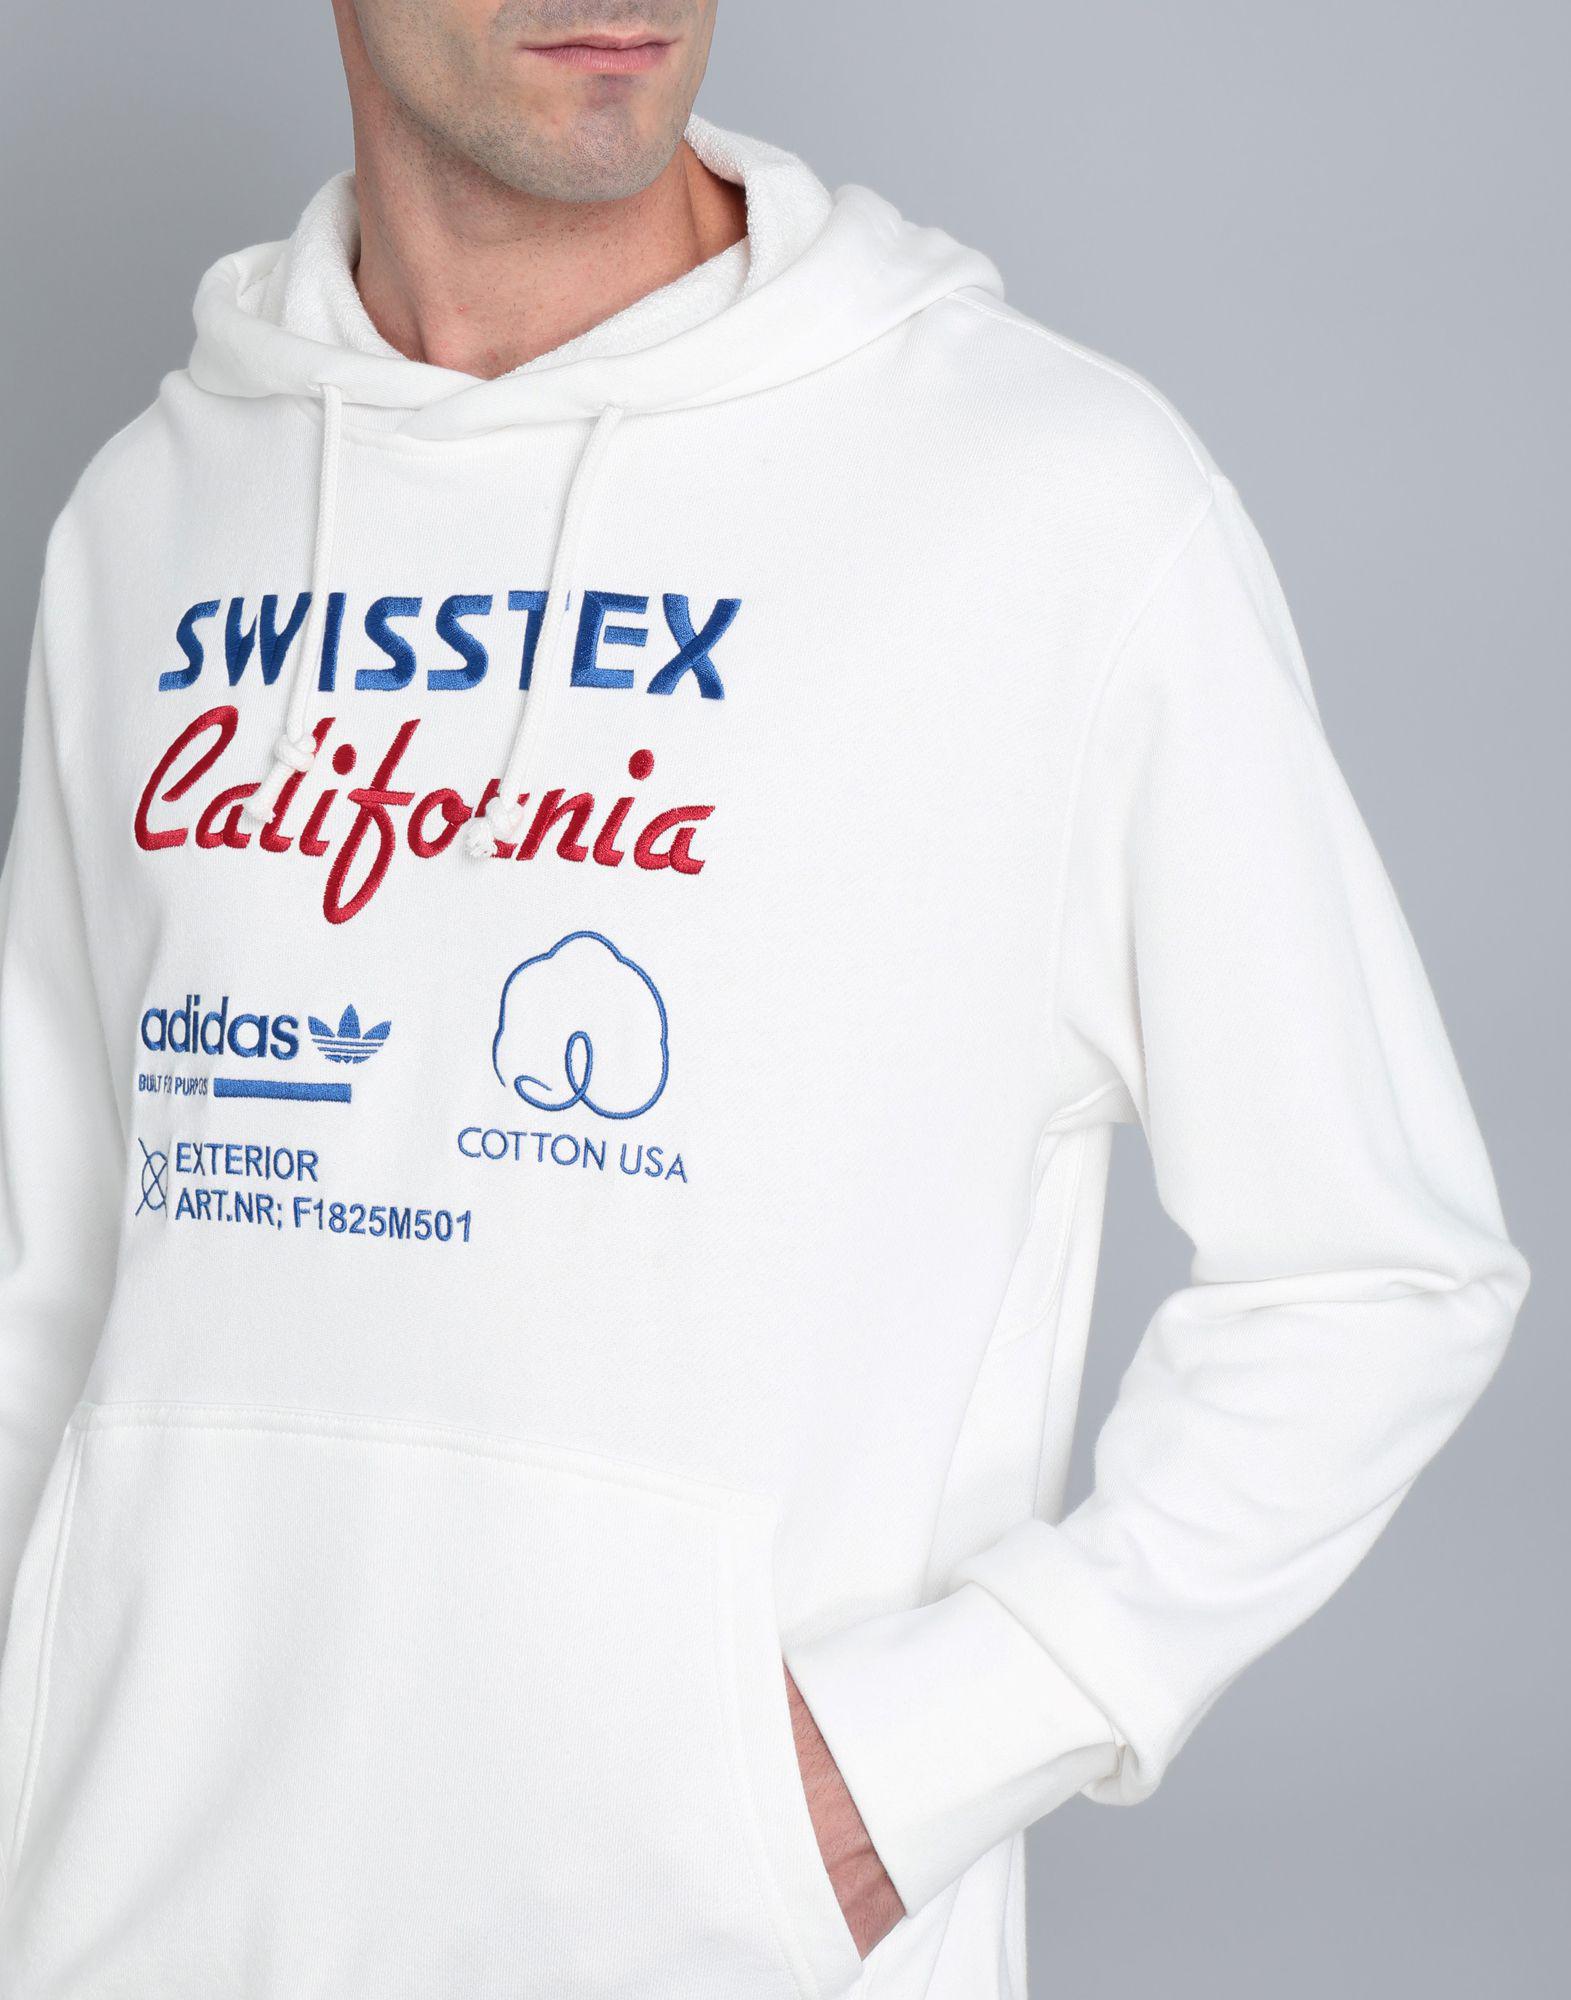 adidas swisstex hoodie